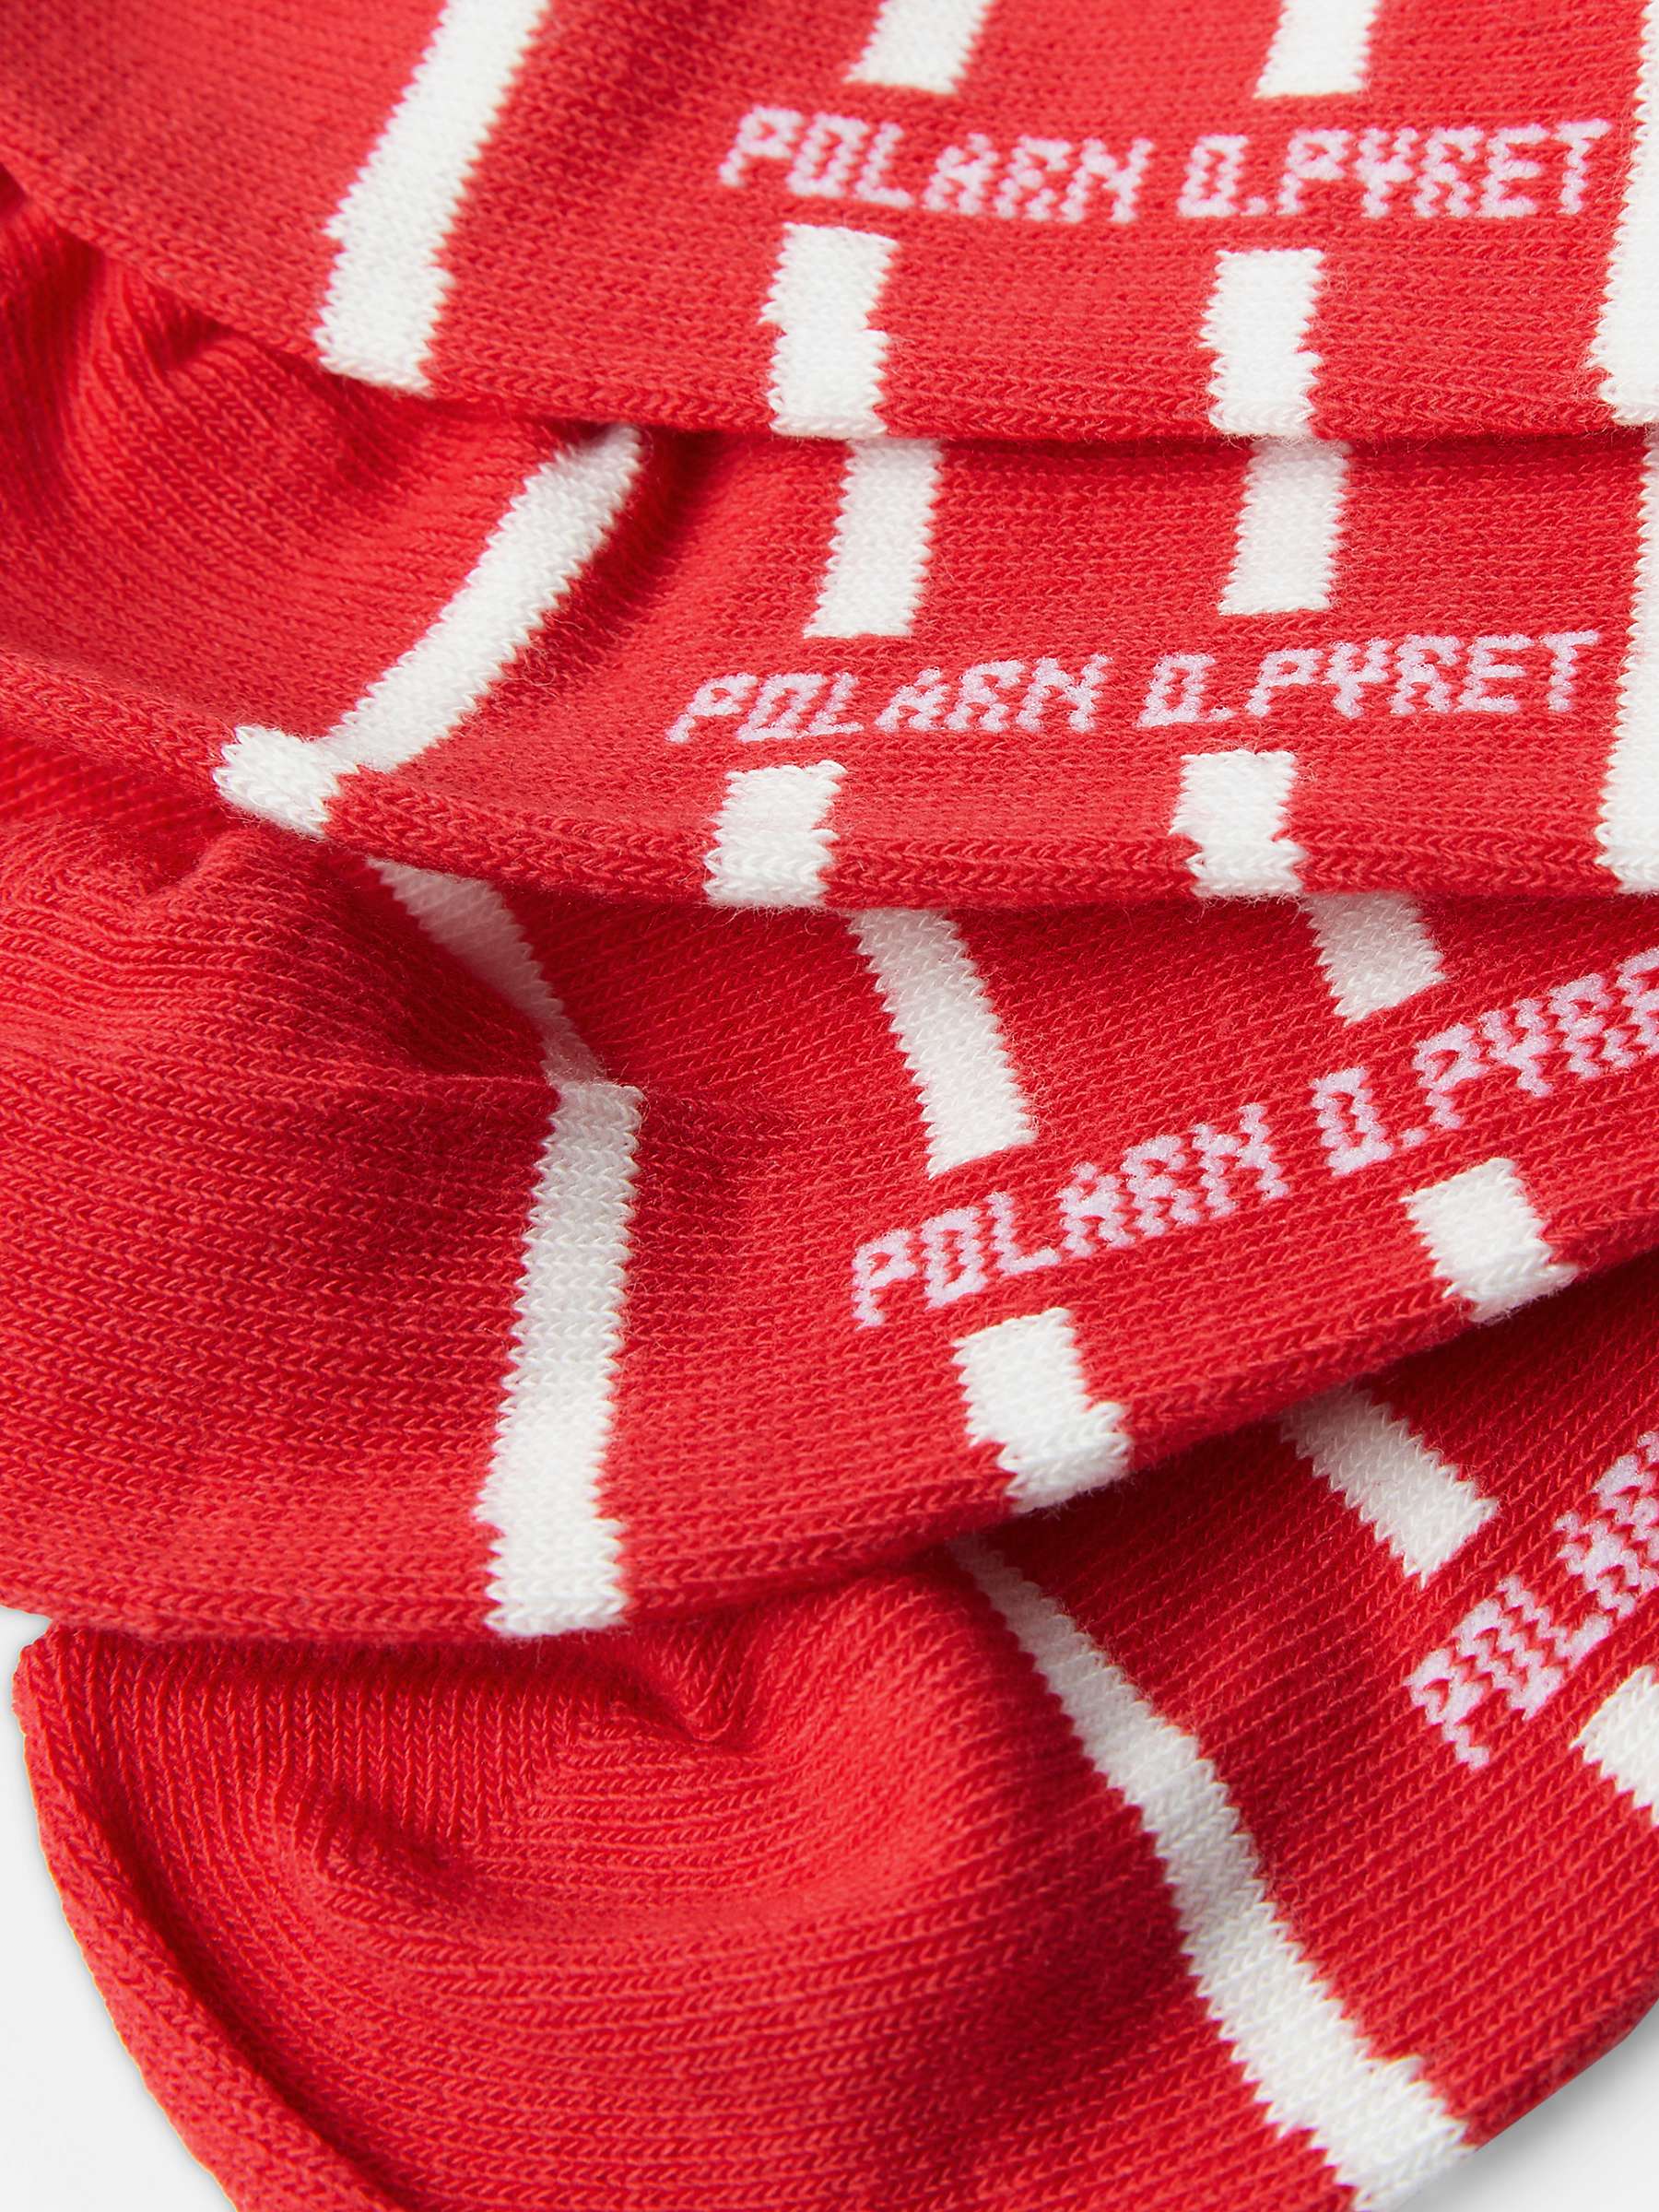 Buy Polarn O. Pyret Kids' Organic Cotton Blend Stripe Socks, Pack of 2, Red Online at johnlewis.com